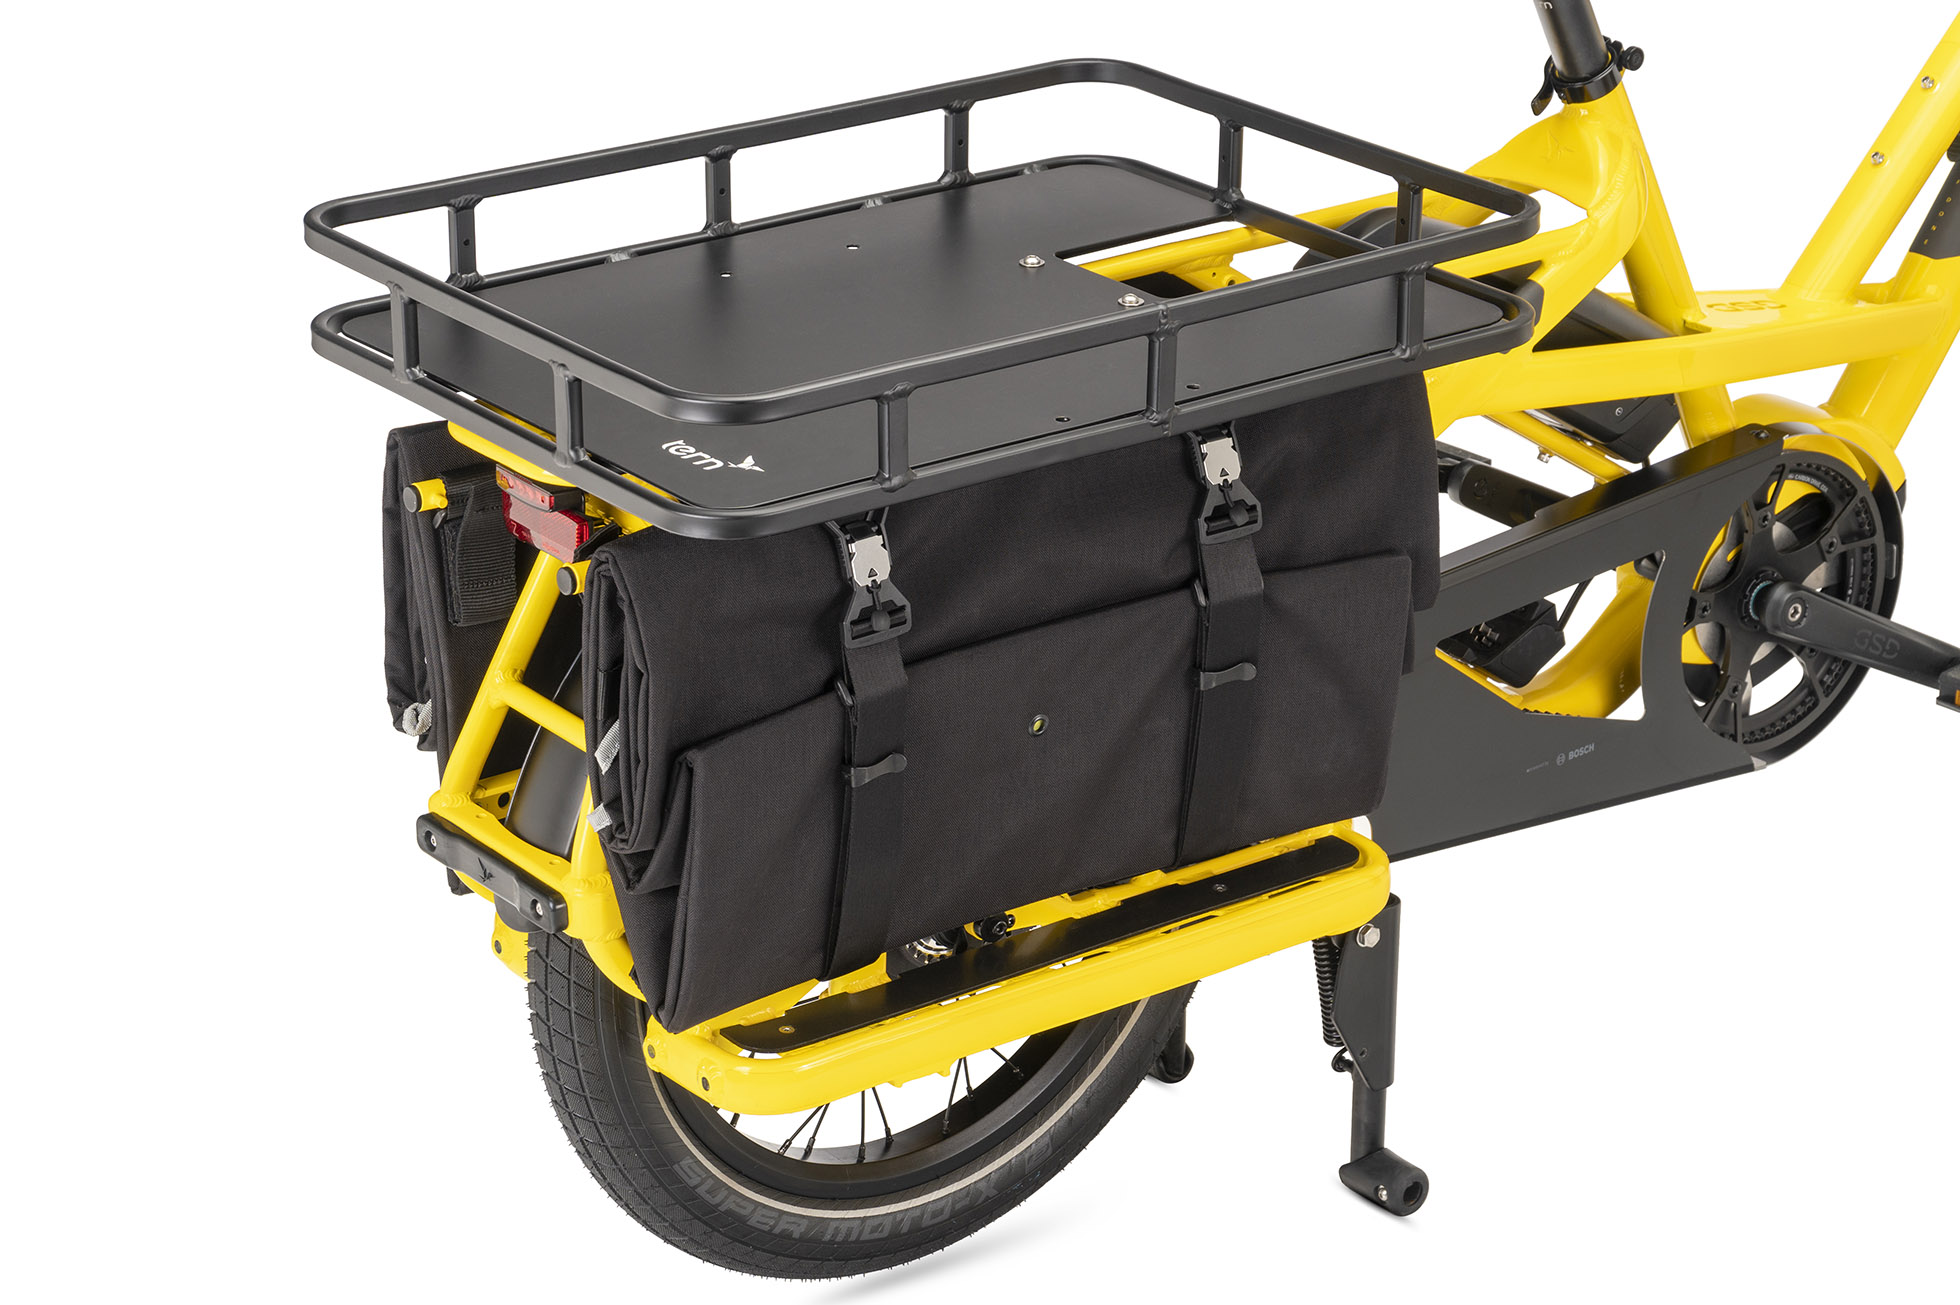 Shortbed Tray on GSD - Rear rack cargo carrier on bike